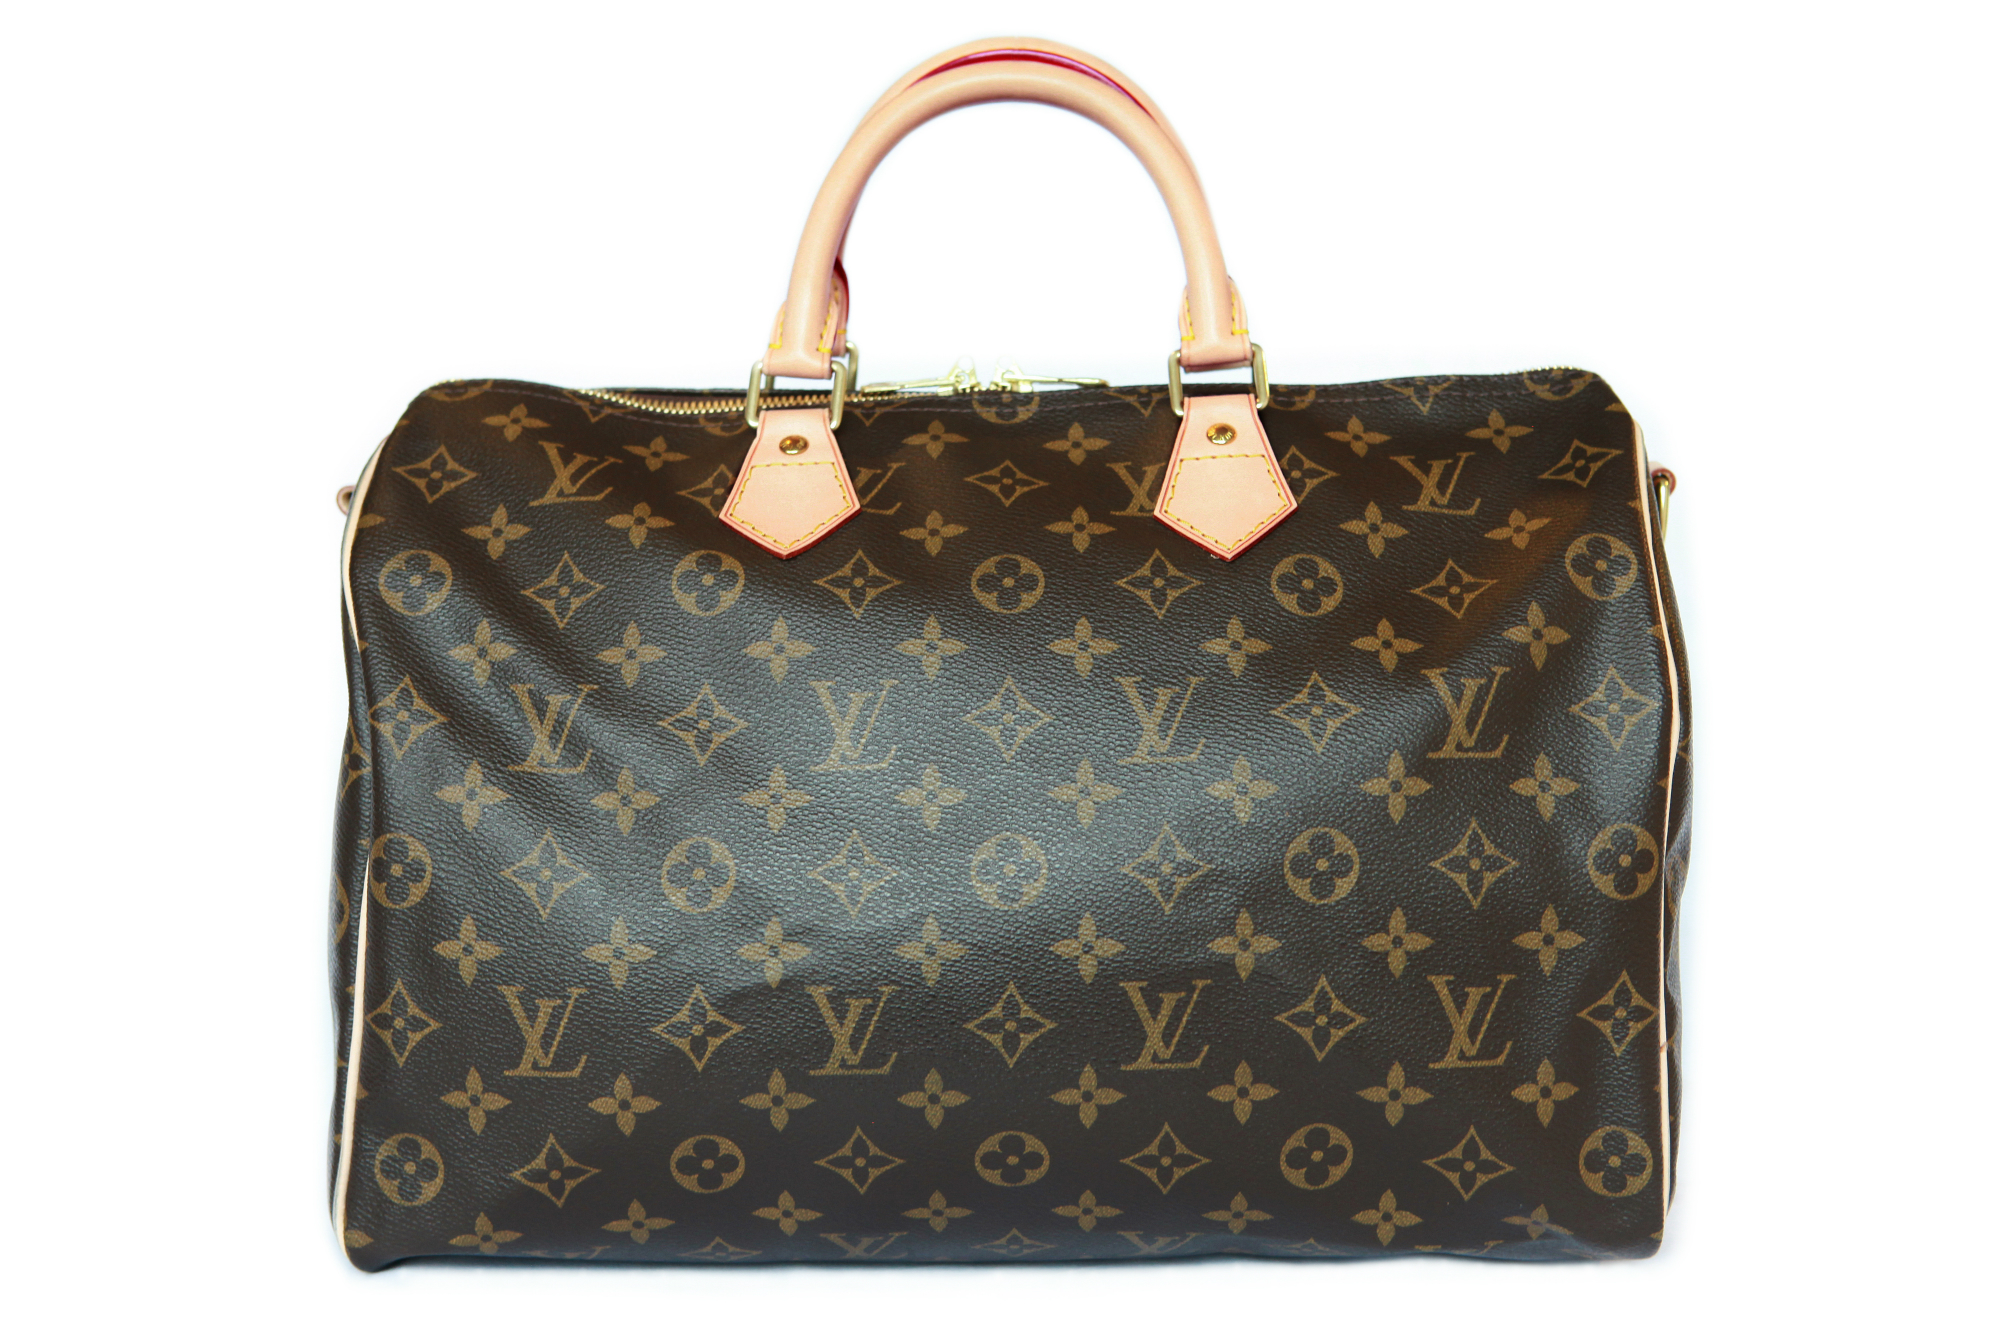 Hire a LOUIS VUITTON Speedy 35 Bandouliere handbag from Elite Couture